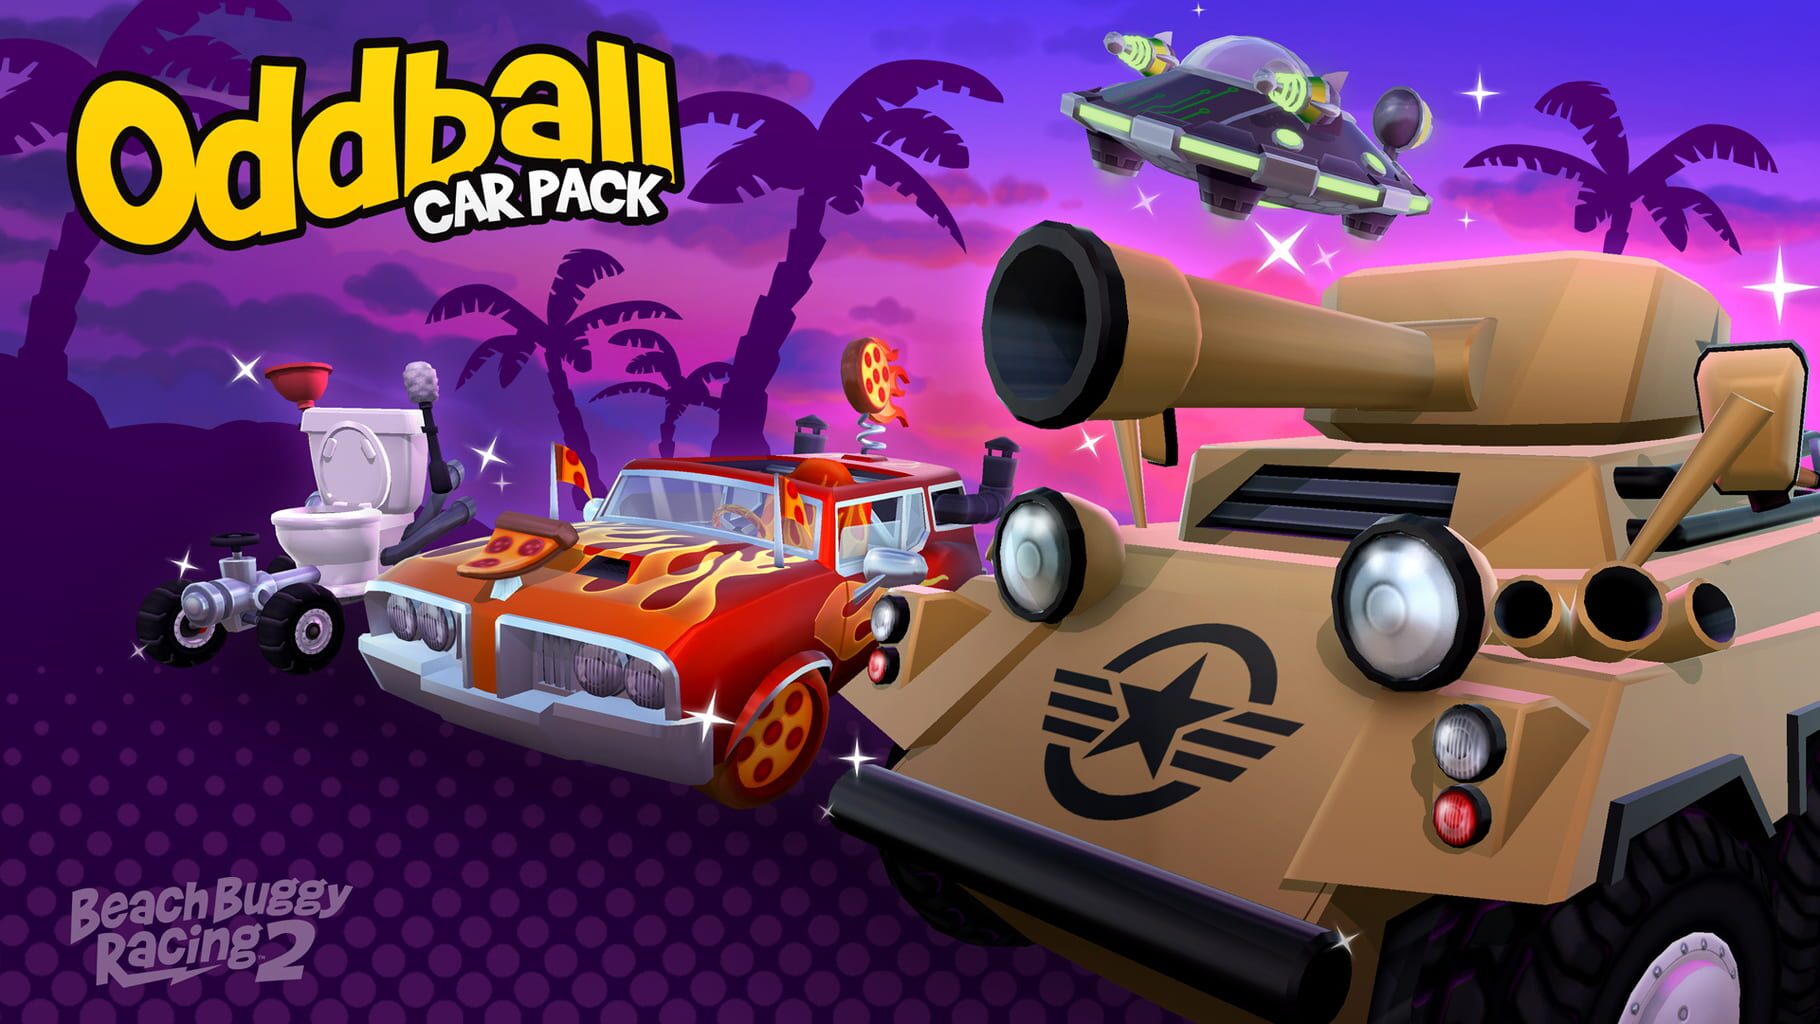 Beach Buggy Racing 2: Island Adventure - Oddball Car Pack artwork